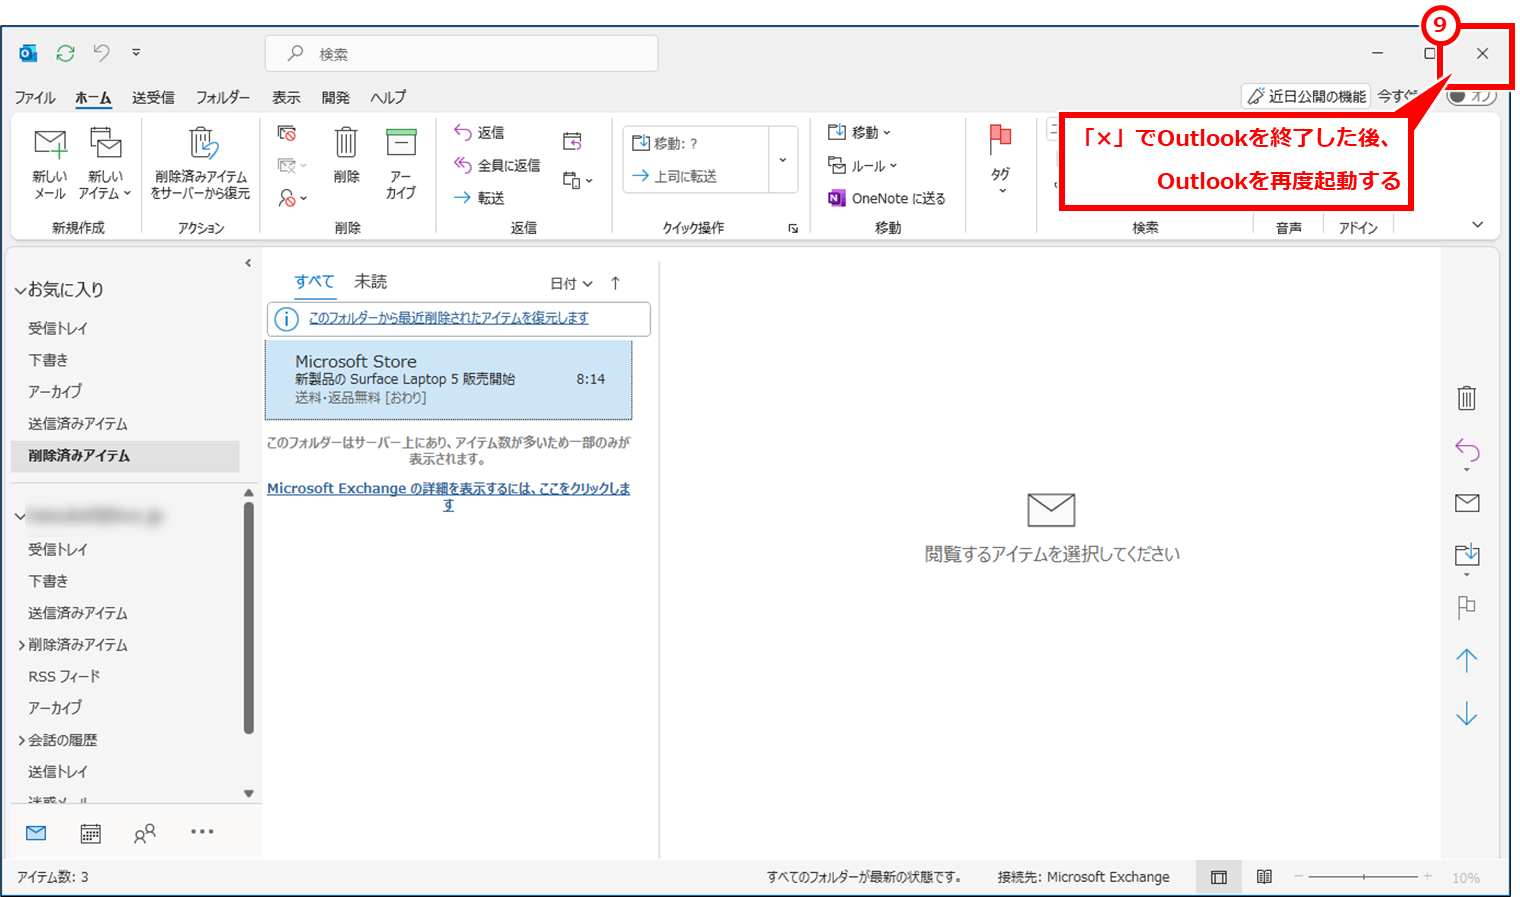 Outlook １年以上前の過去のメールが見れない場合の対処
Outlookを×ボタンで終了し、再度Outlookwo起動しなおすと反映される。